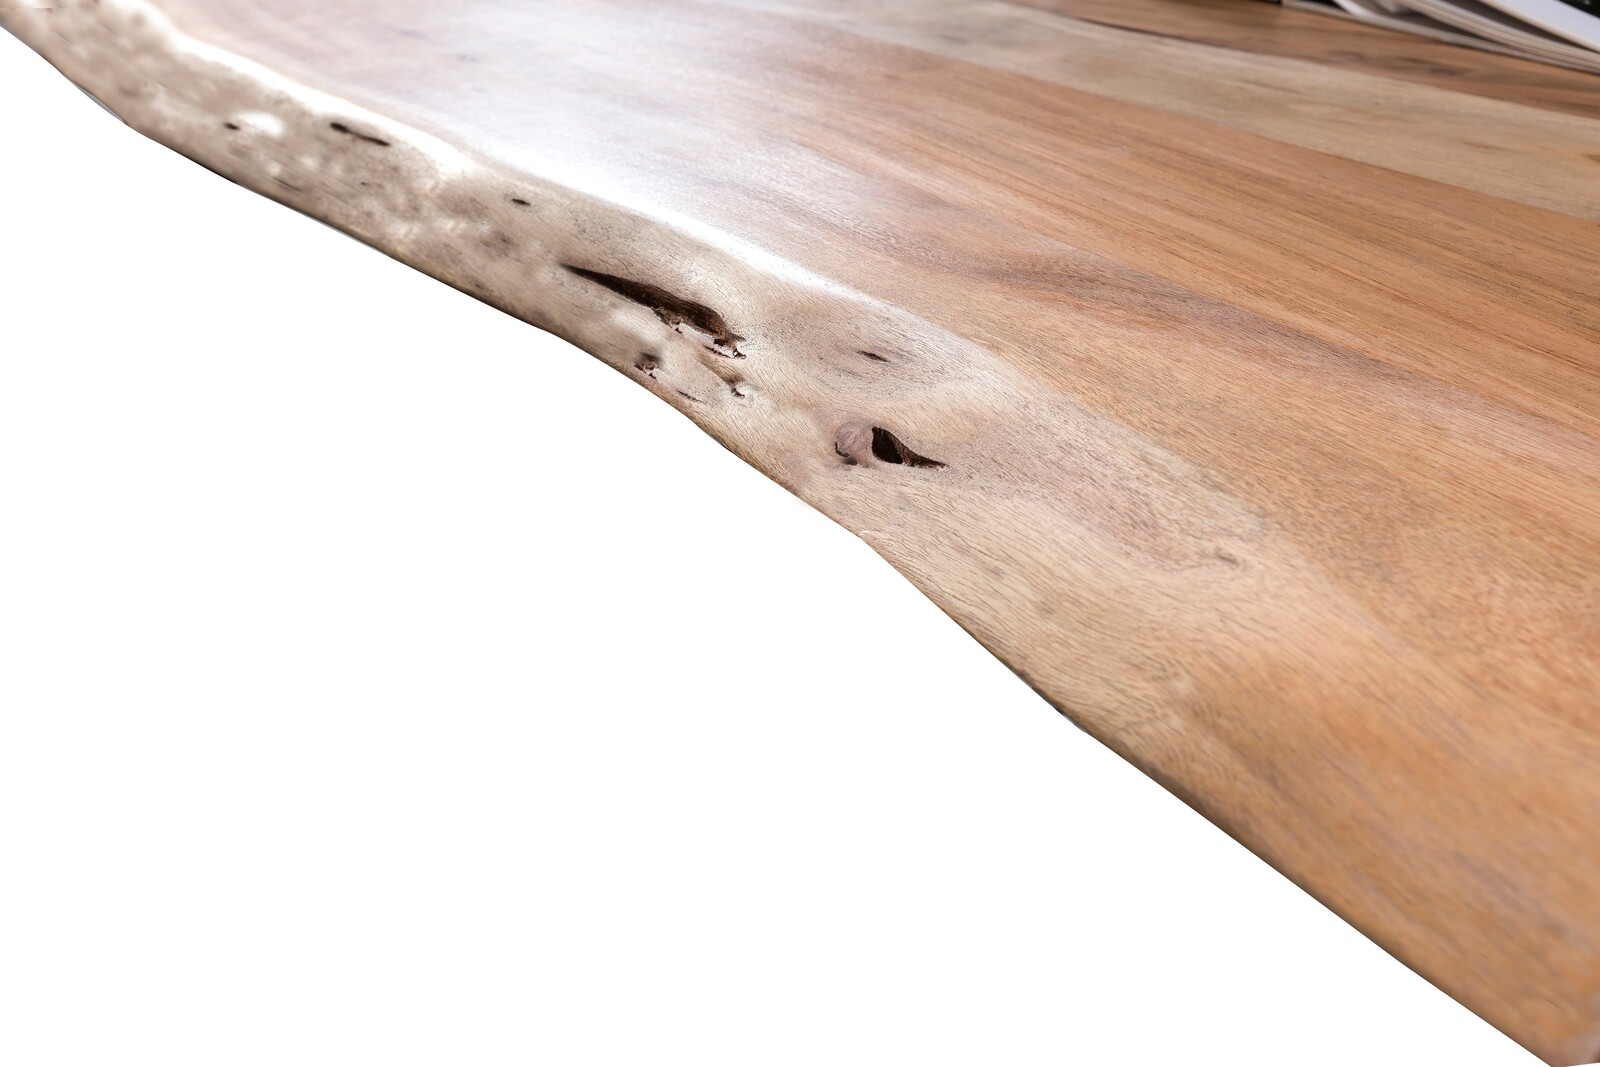 Baumkante-Esstisch TABLES & CO 220 x 100 cm Akazie natur